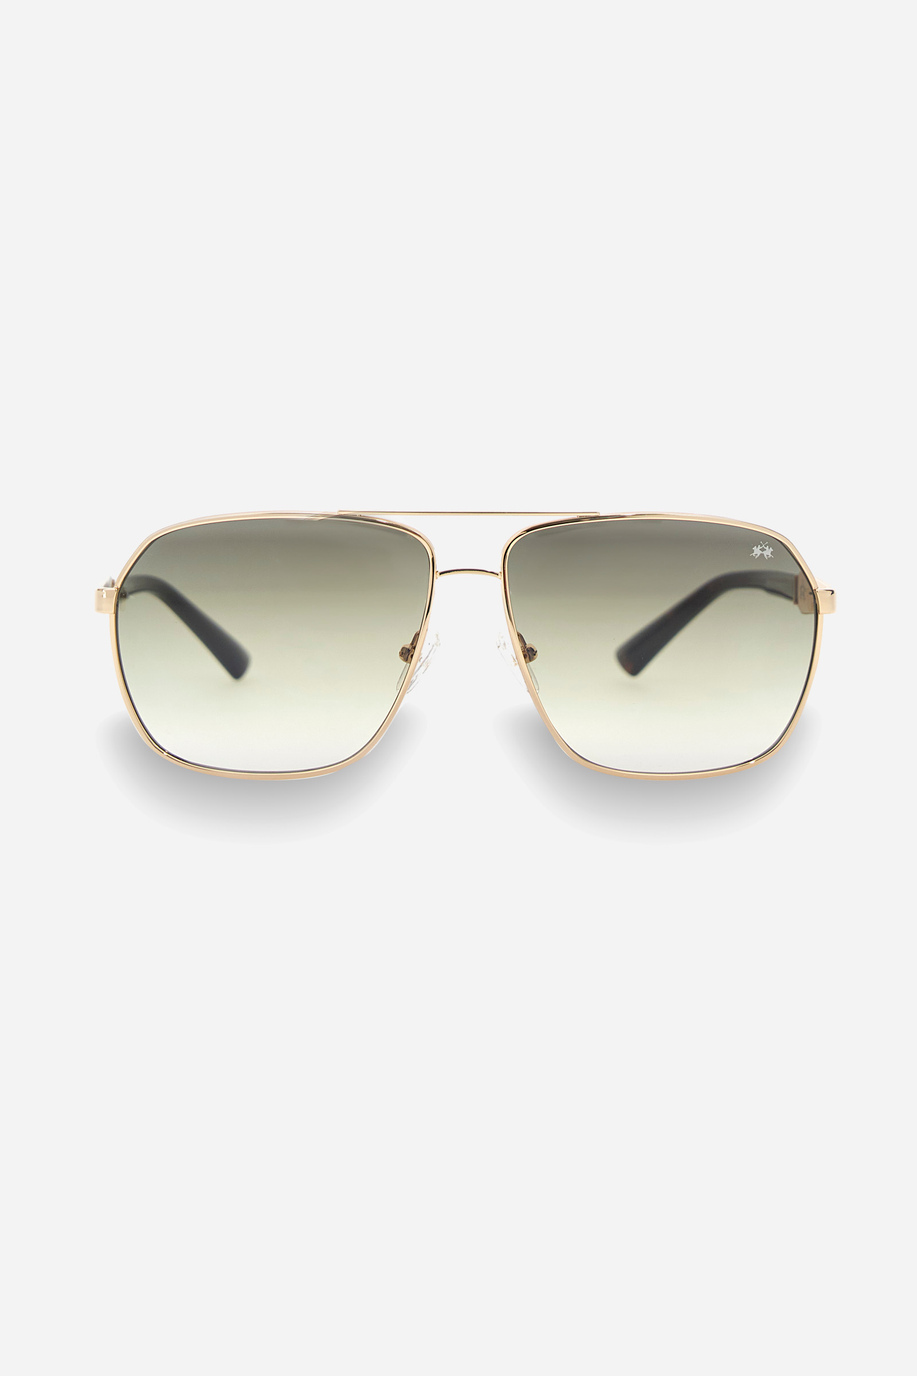 Metal sunglasses aviator style - Accessories | La Martina - Official Online Shop